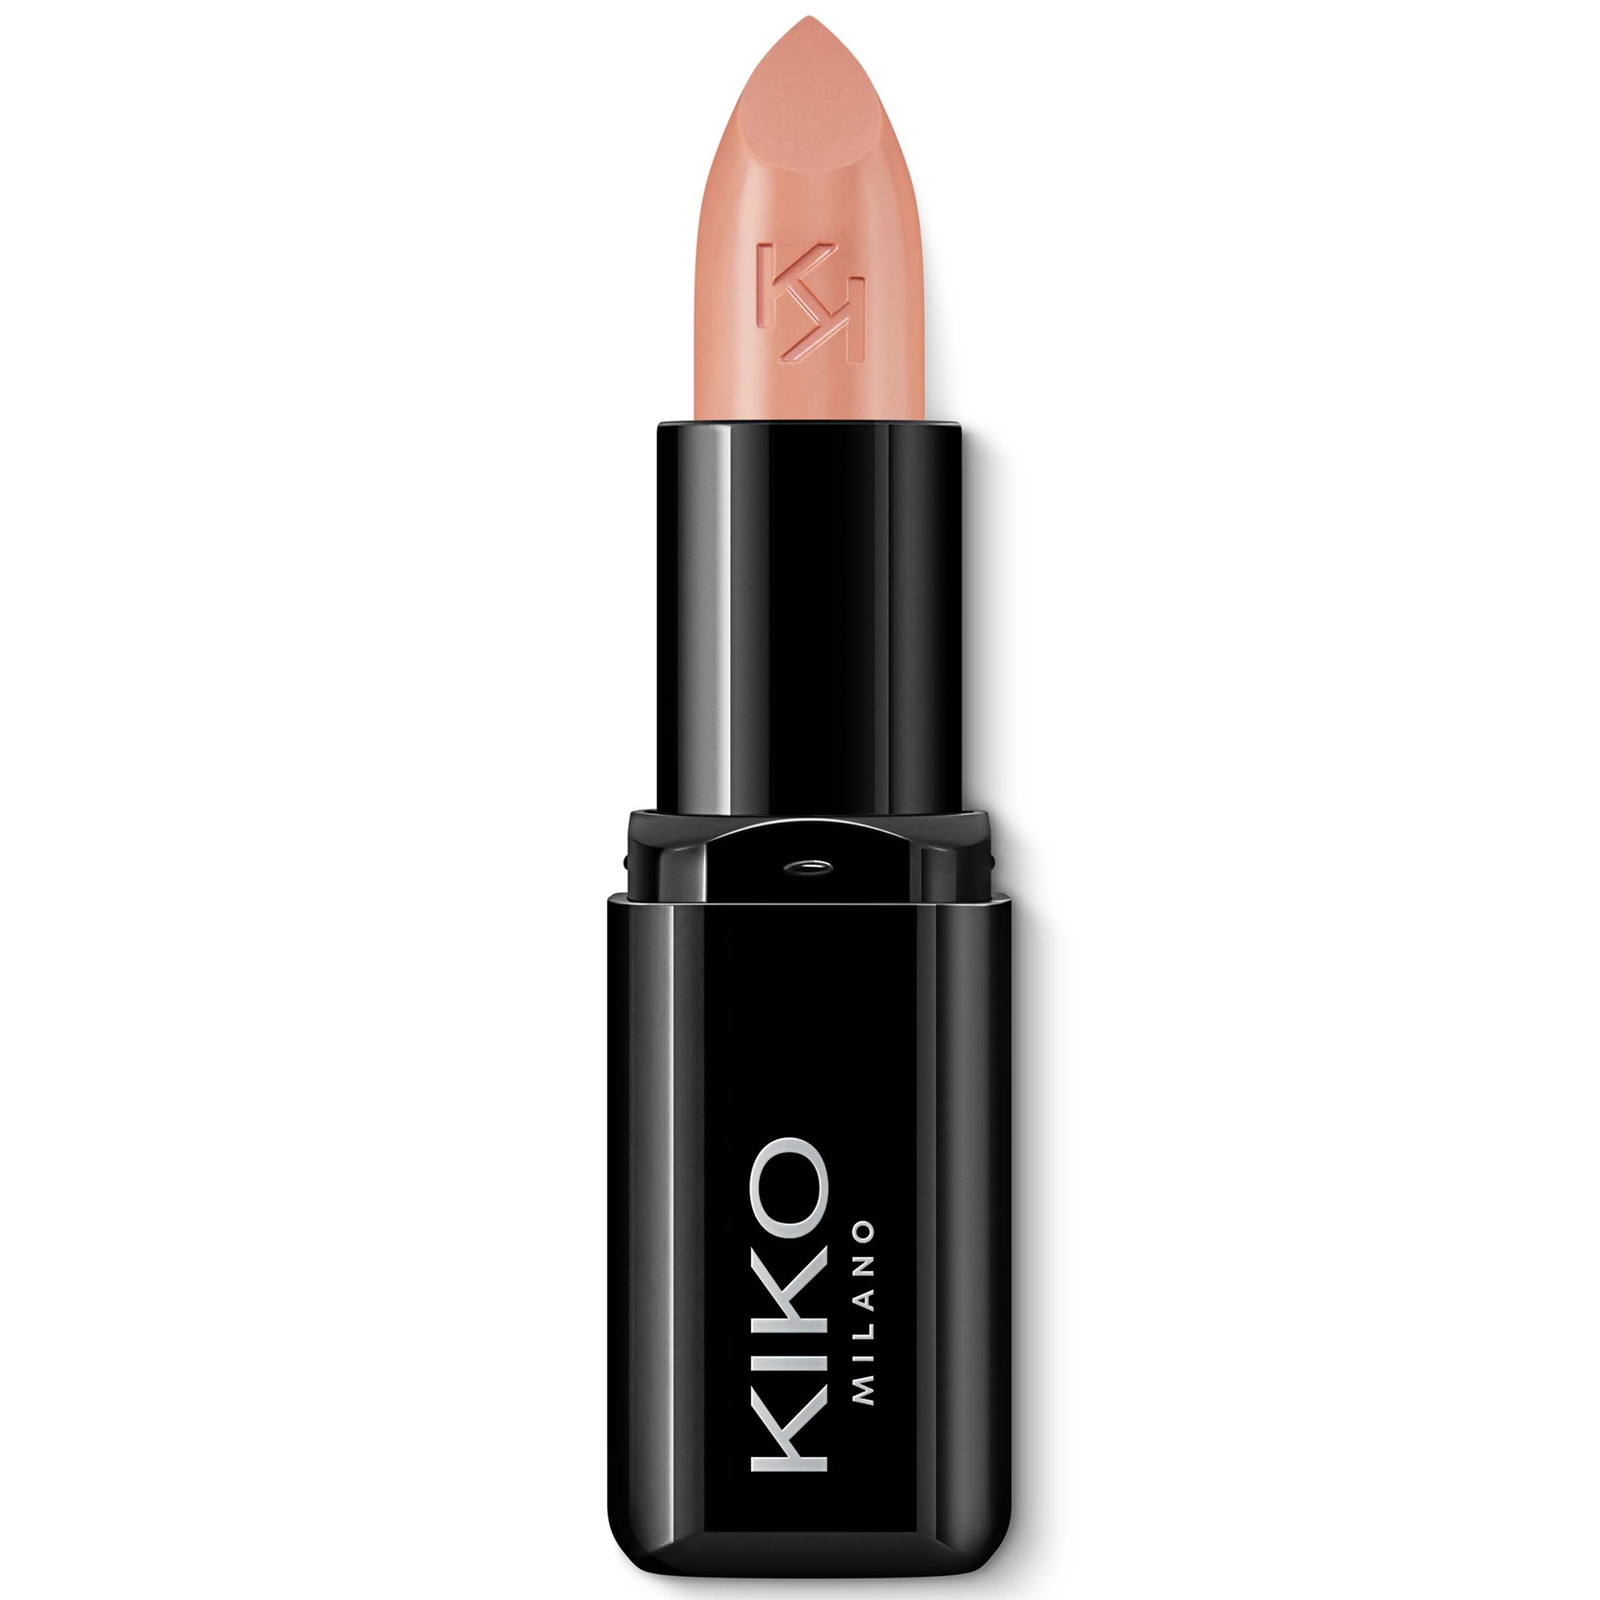 KIKO Milano Smart Fusion Lipstick 3g (Various Shades) - 402 Peachy Nude